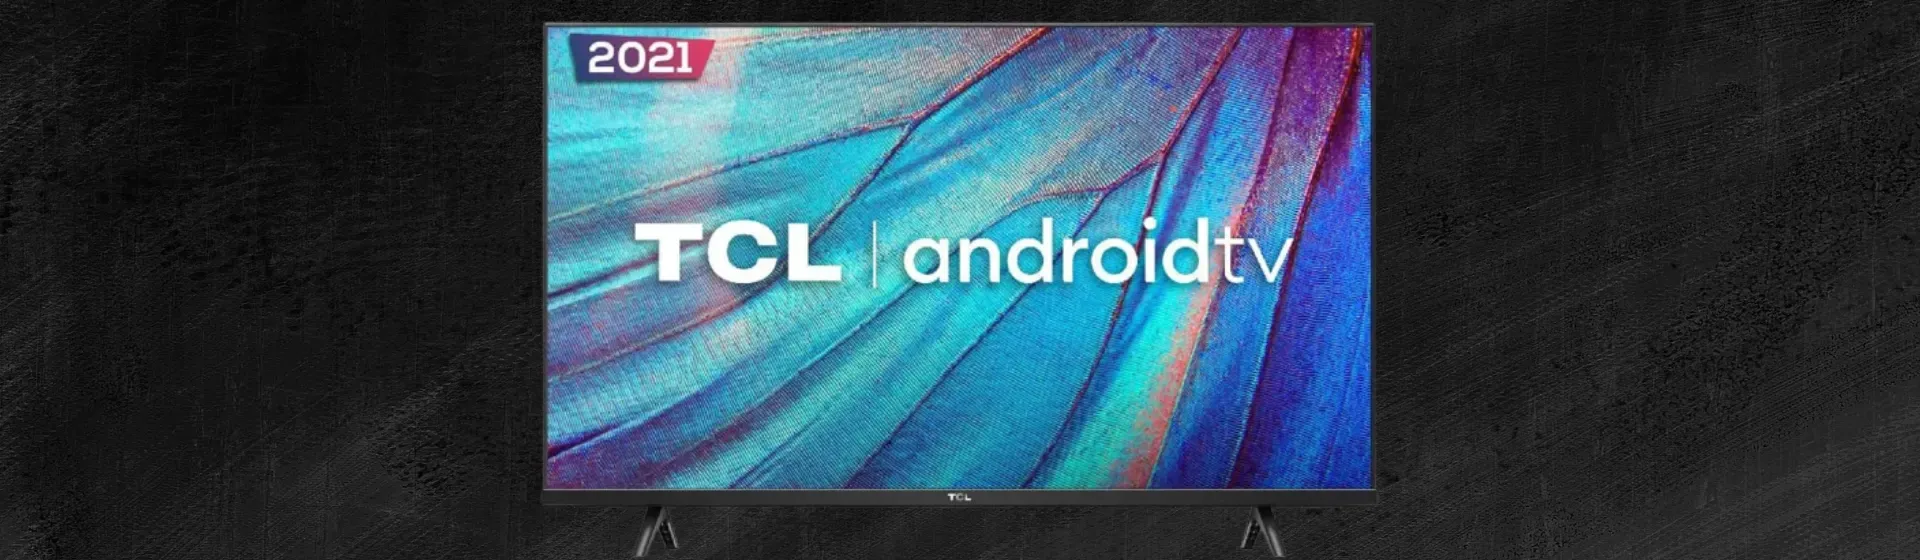 Smart TV 32” HD LED TCL S615 VA 60Hz - Android Wi-Fi e Bluetooth Google  Assistente 2 HDMI - Smart TV - Magazine Luiza